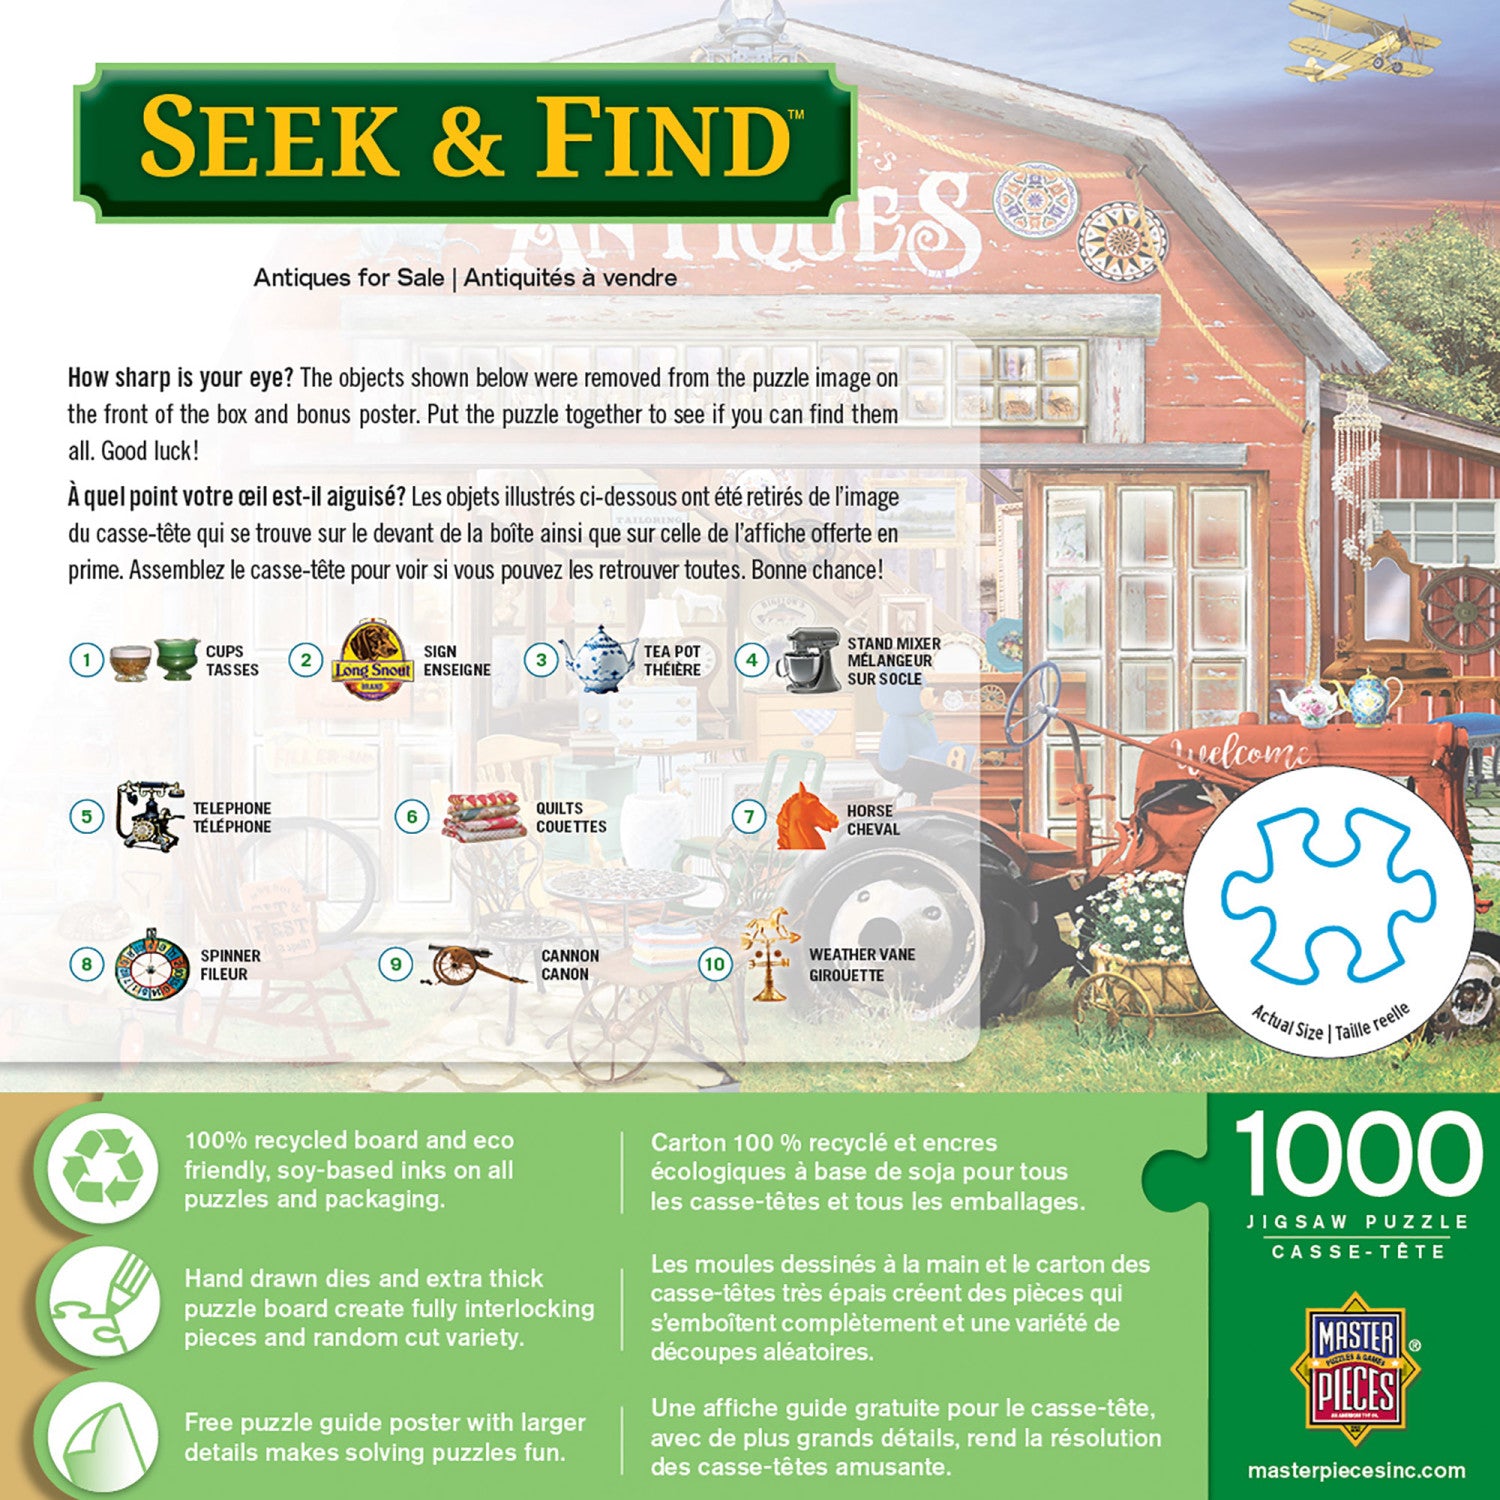 Seek & Find - Antiques for Sale 1000 Piece Jigsaw Puzzle